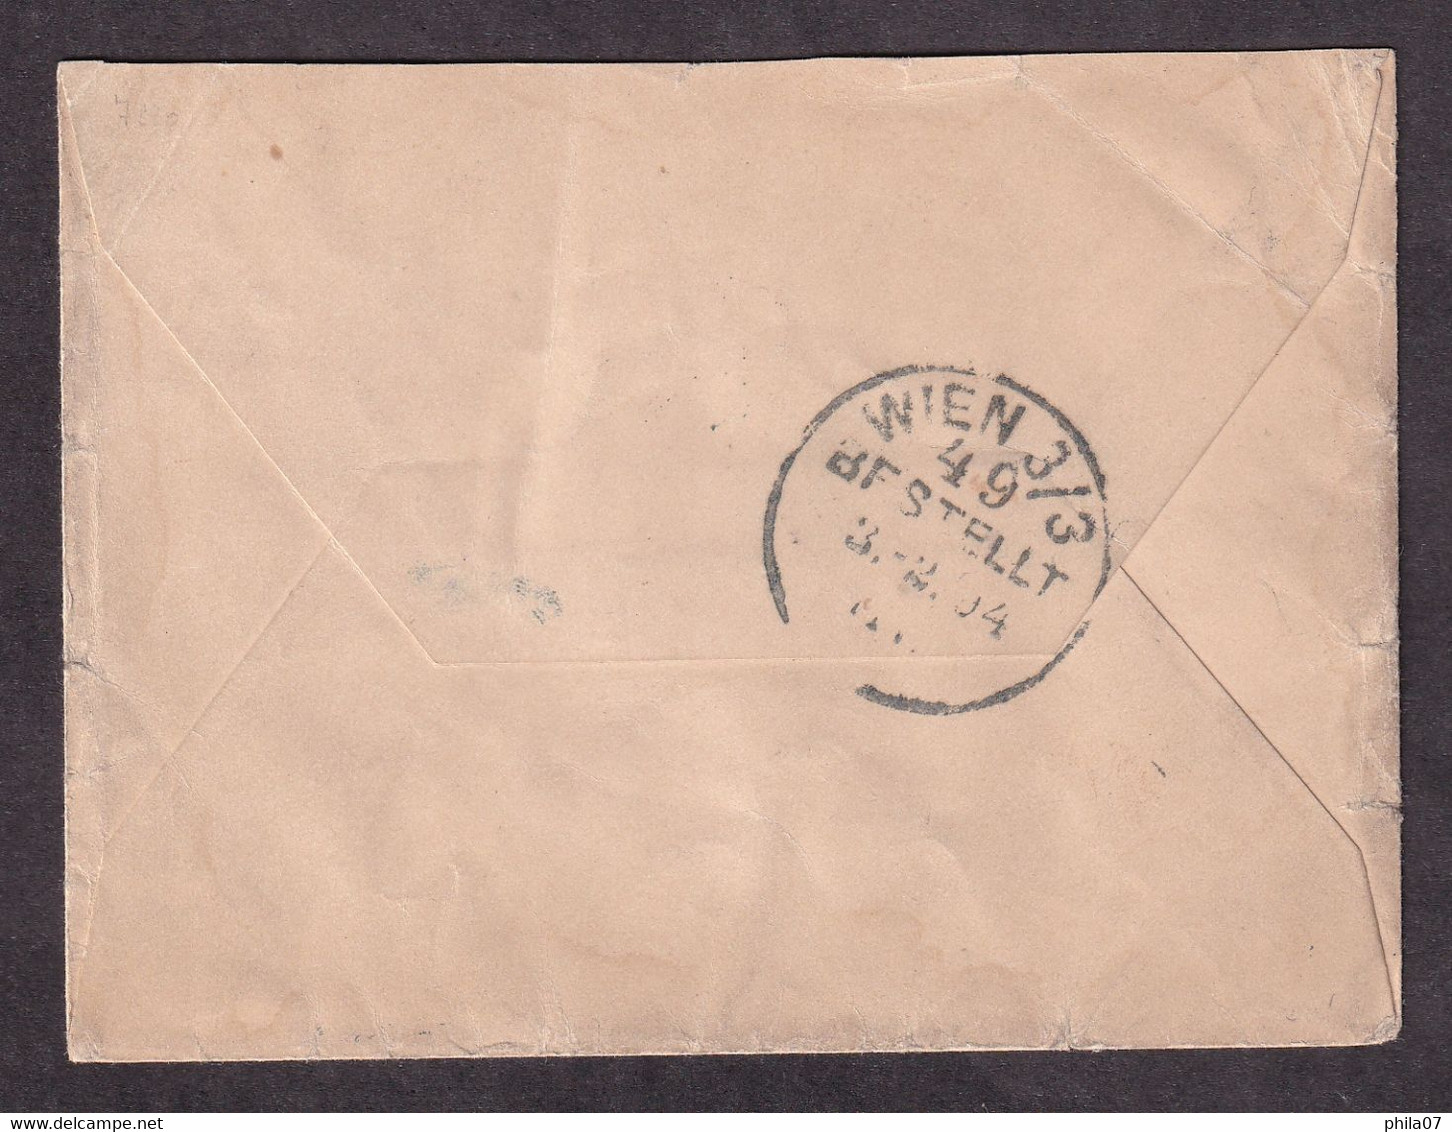 Austria/Croatia - Small Size Letter Sent To Wien Cancelled By M.T.P.O. LLOYD AUSTRIACO ??? Postmark 01.02.1894. - Briefe U. Dokumente